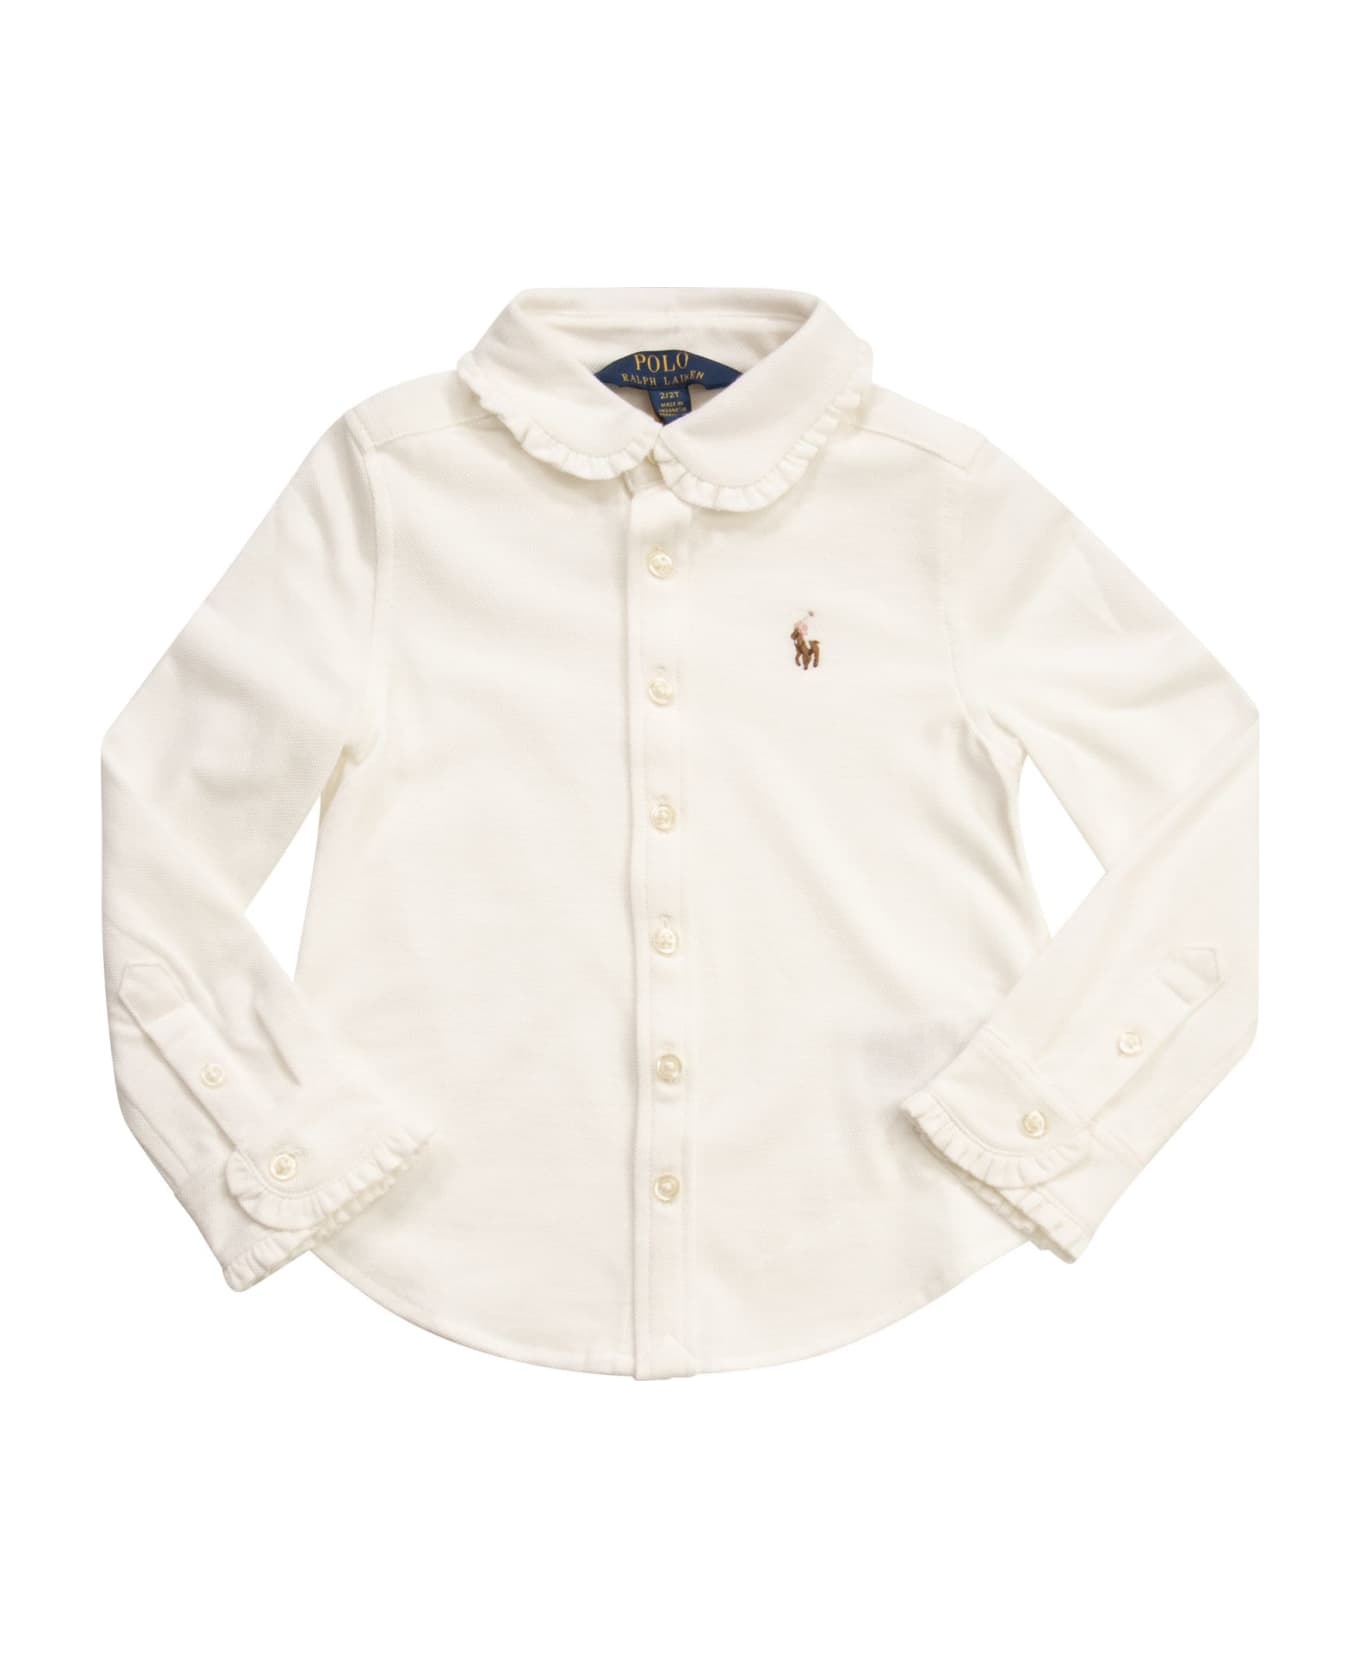 Polo Ralph Lauren Knitted Oxford Shirt - White シャツ